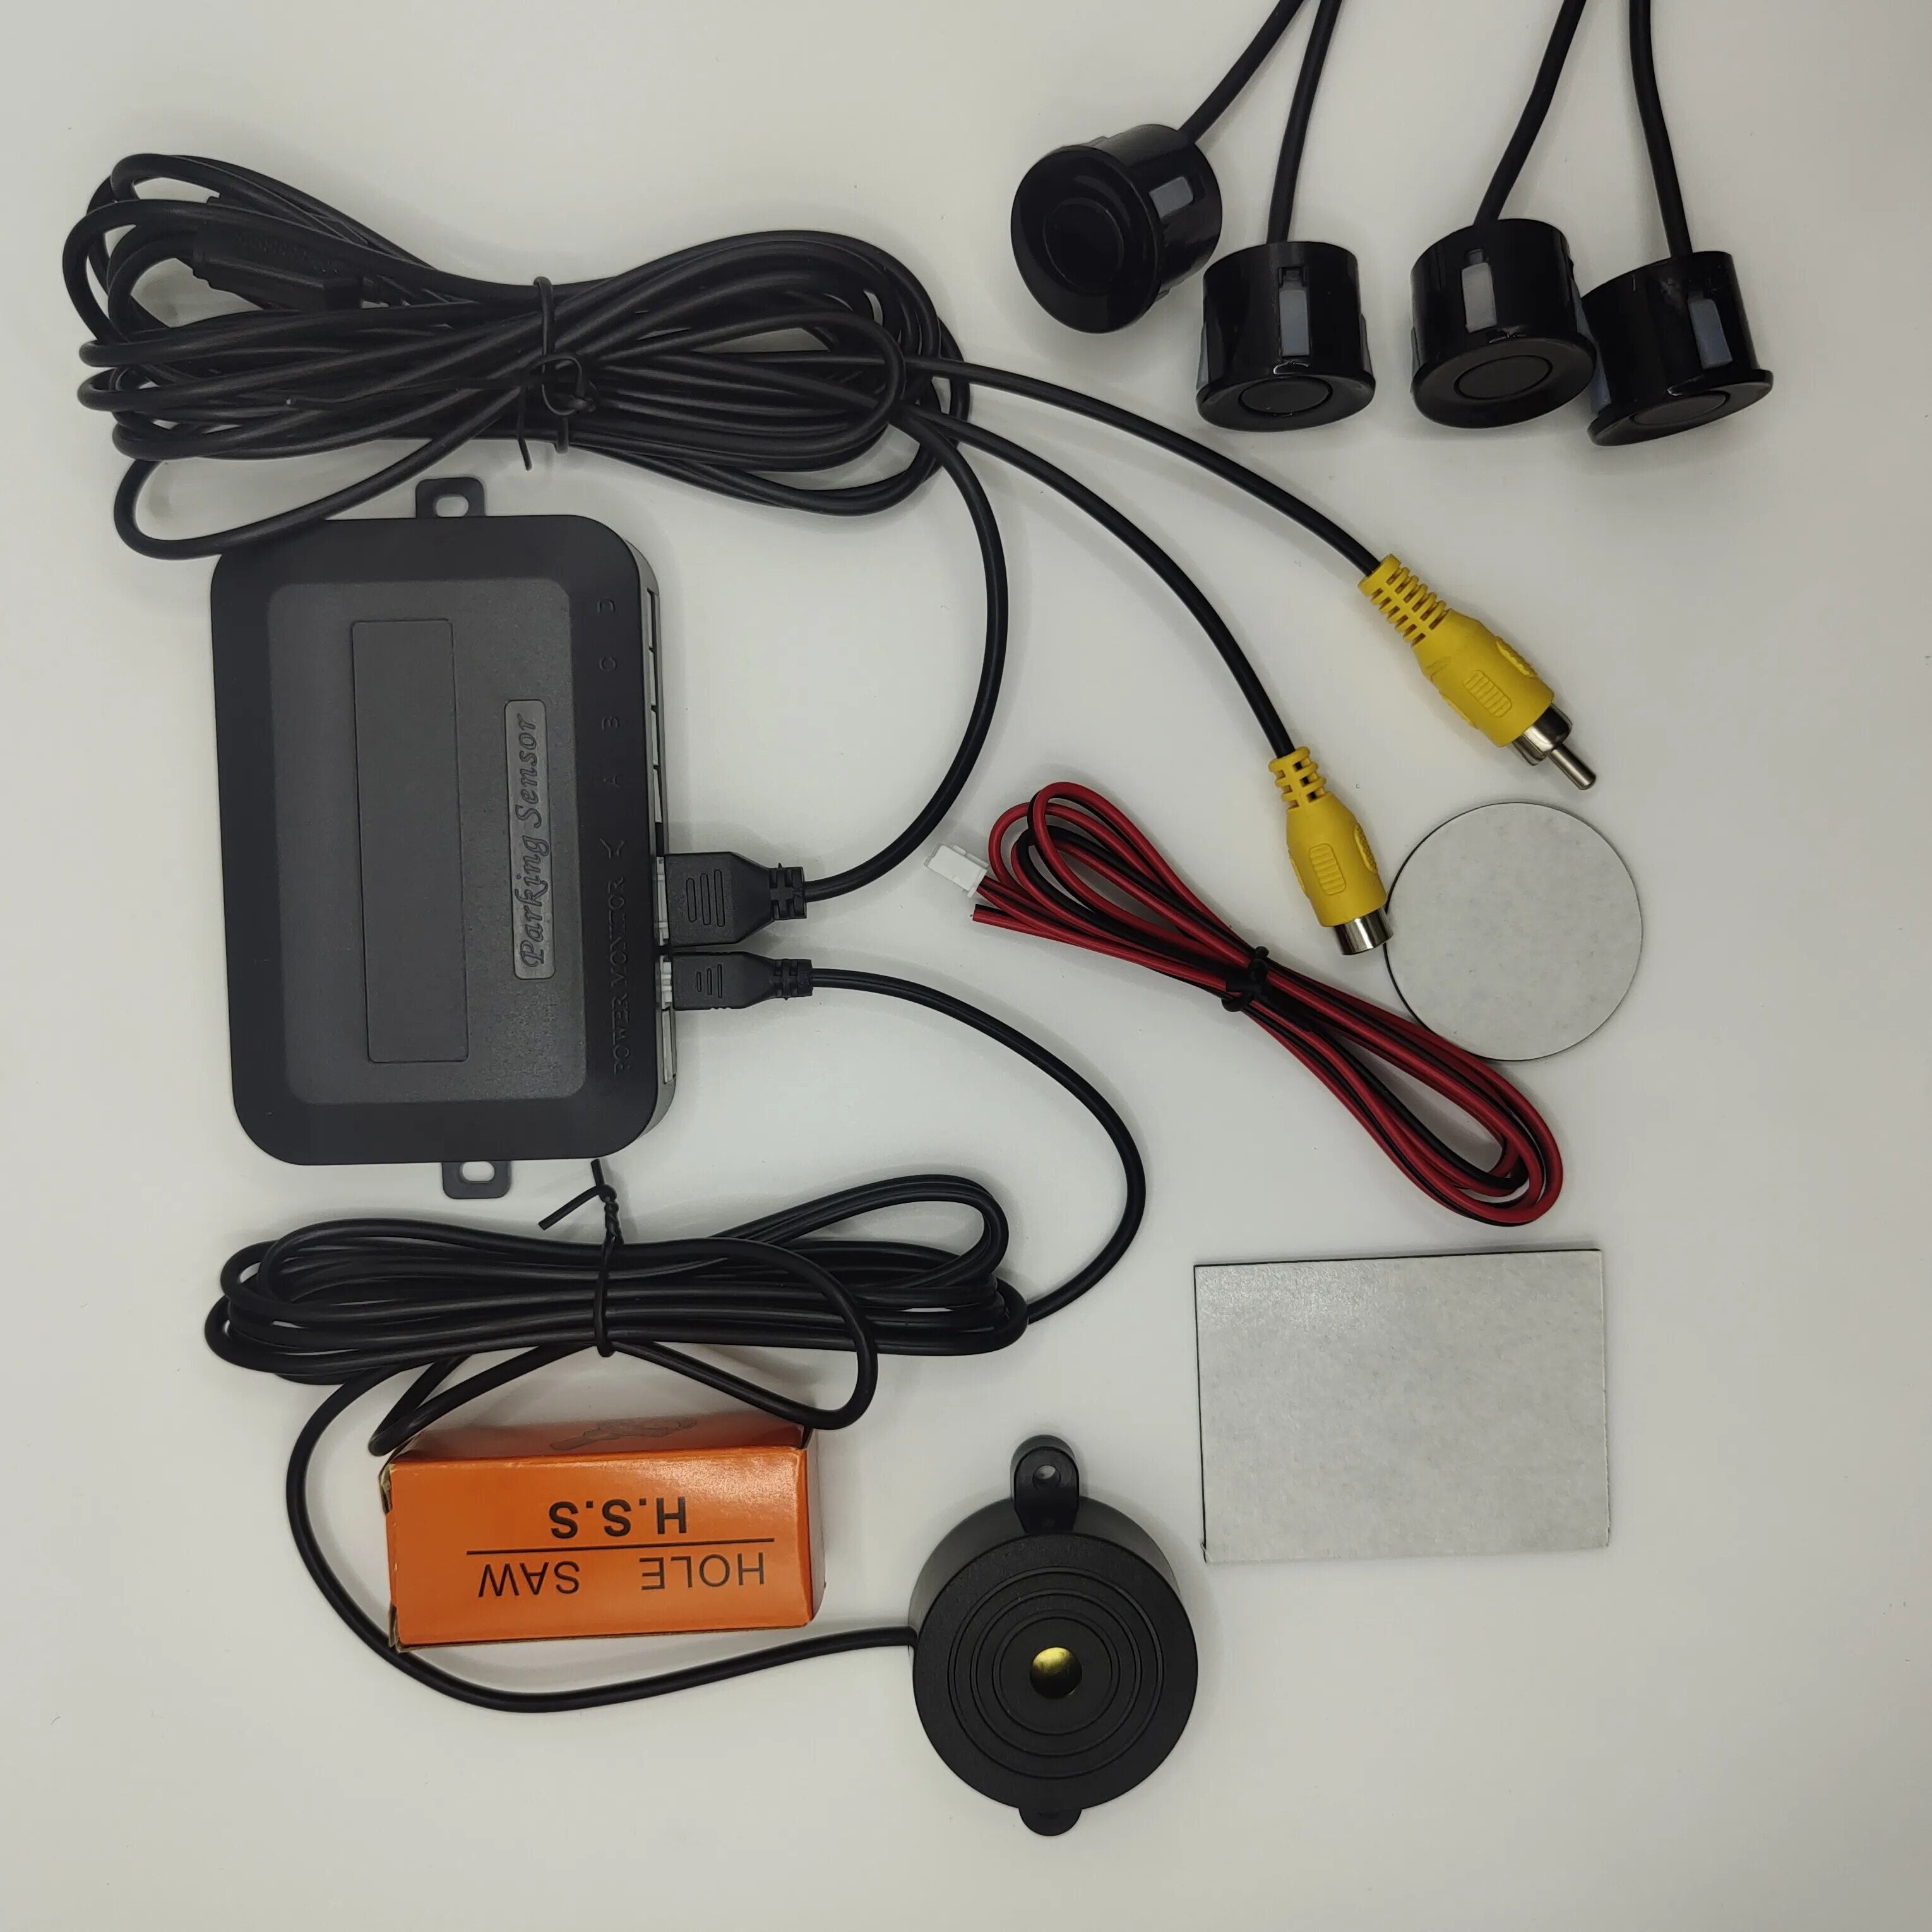 Video Parking Sensor Kit Car Reverse Backup Radar Assistance Auto Monitor Digital Display for Camera Car Monitor